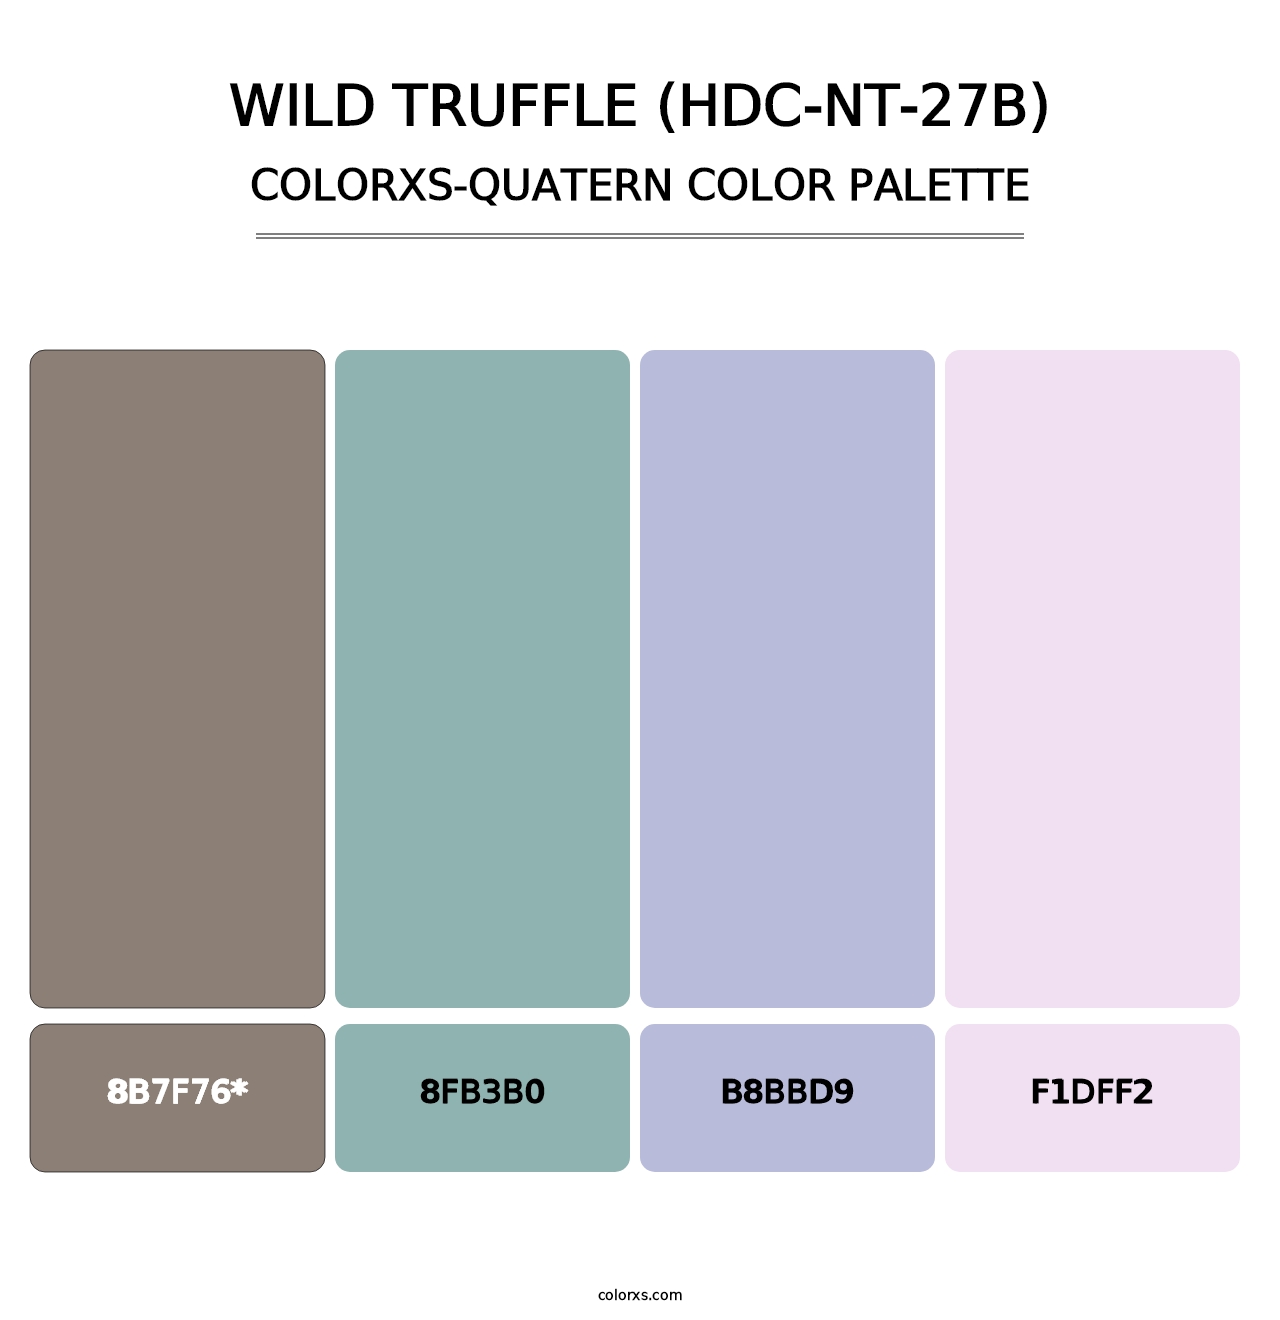 Wild Truffle (HDC-NT-27B) - Colorxs Quatern Palette